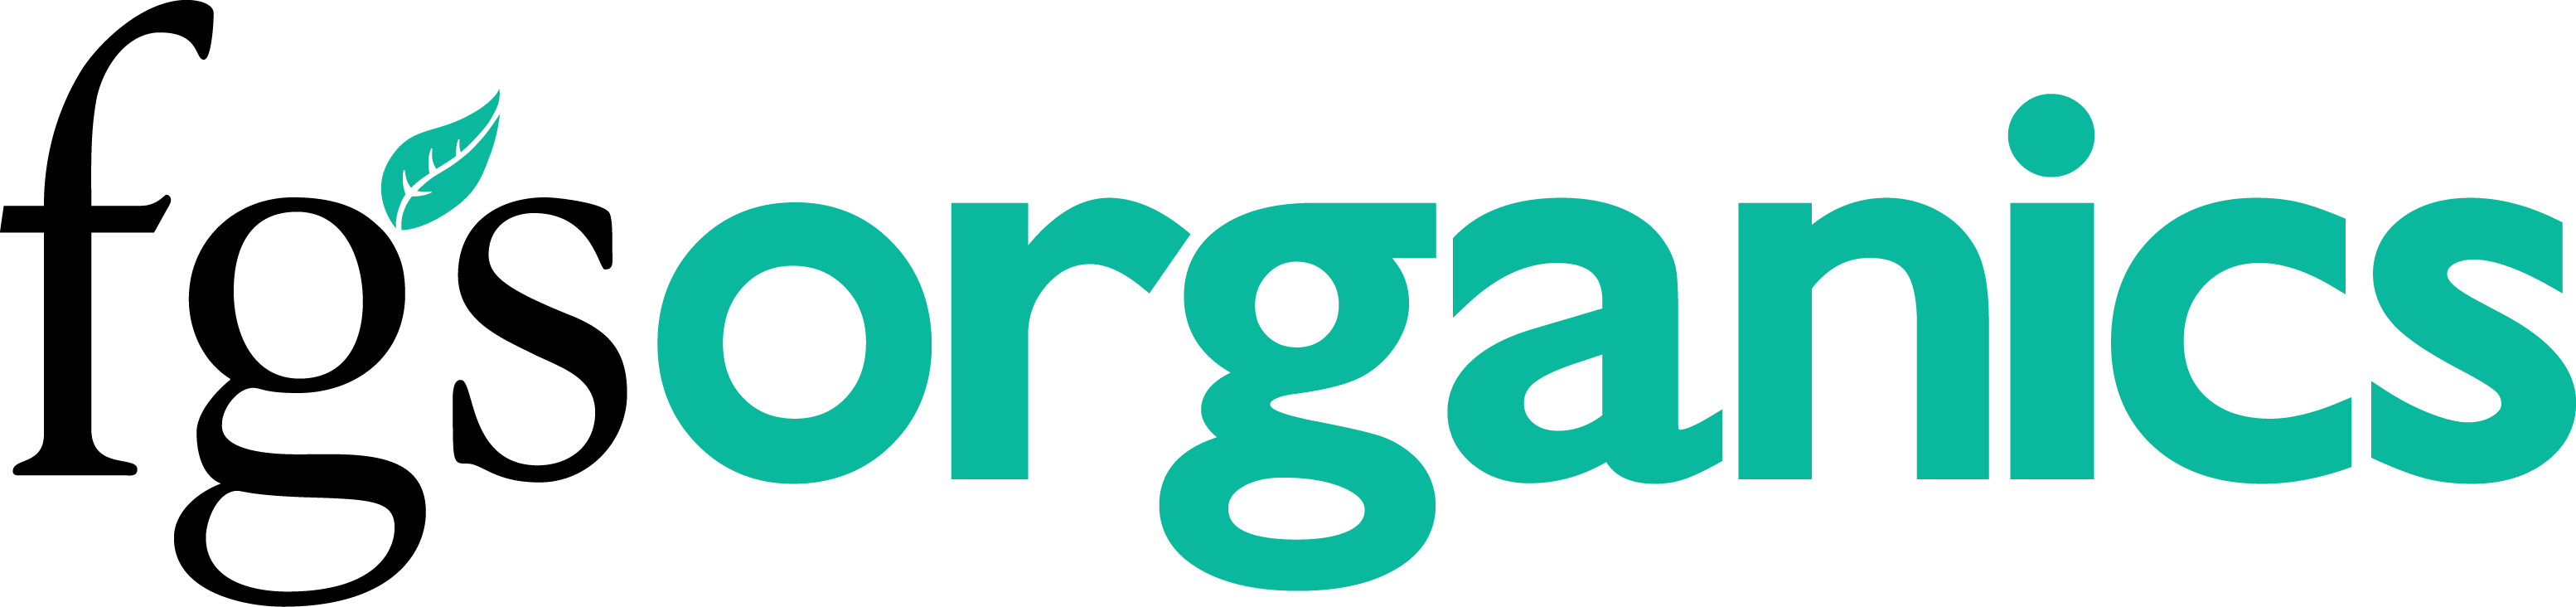 fgs_organics_logo